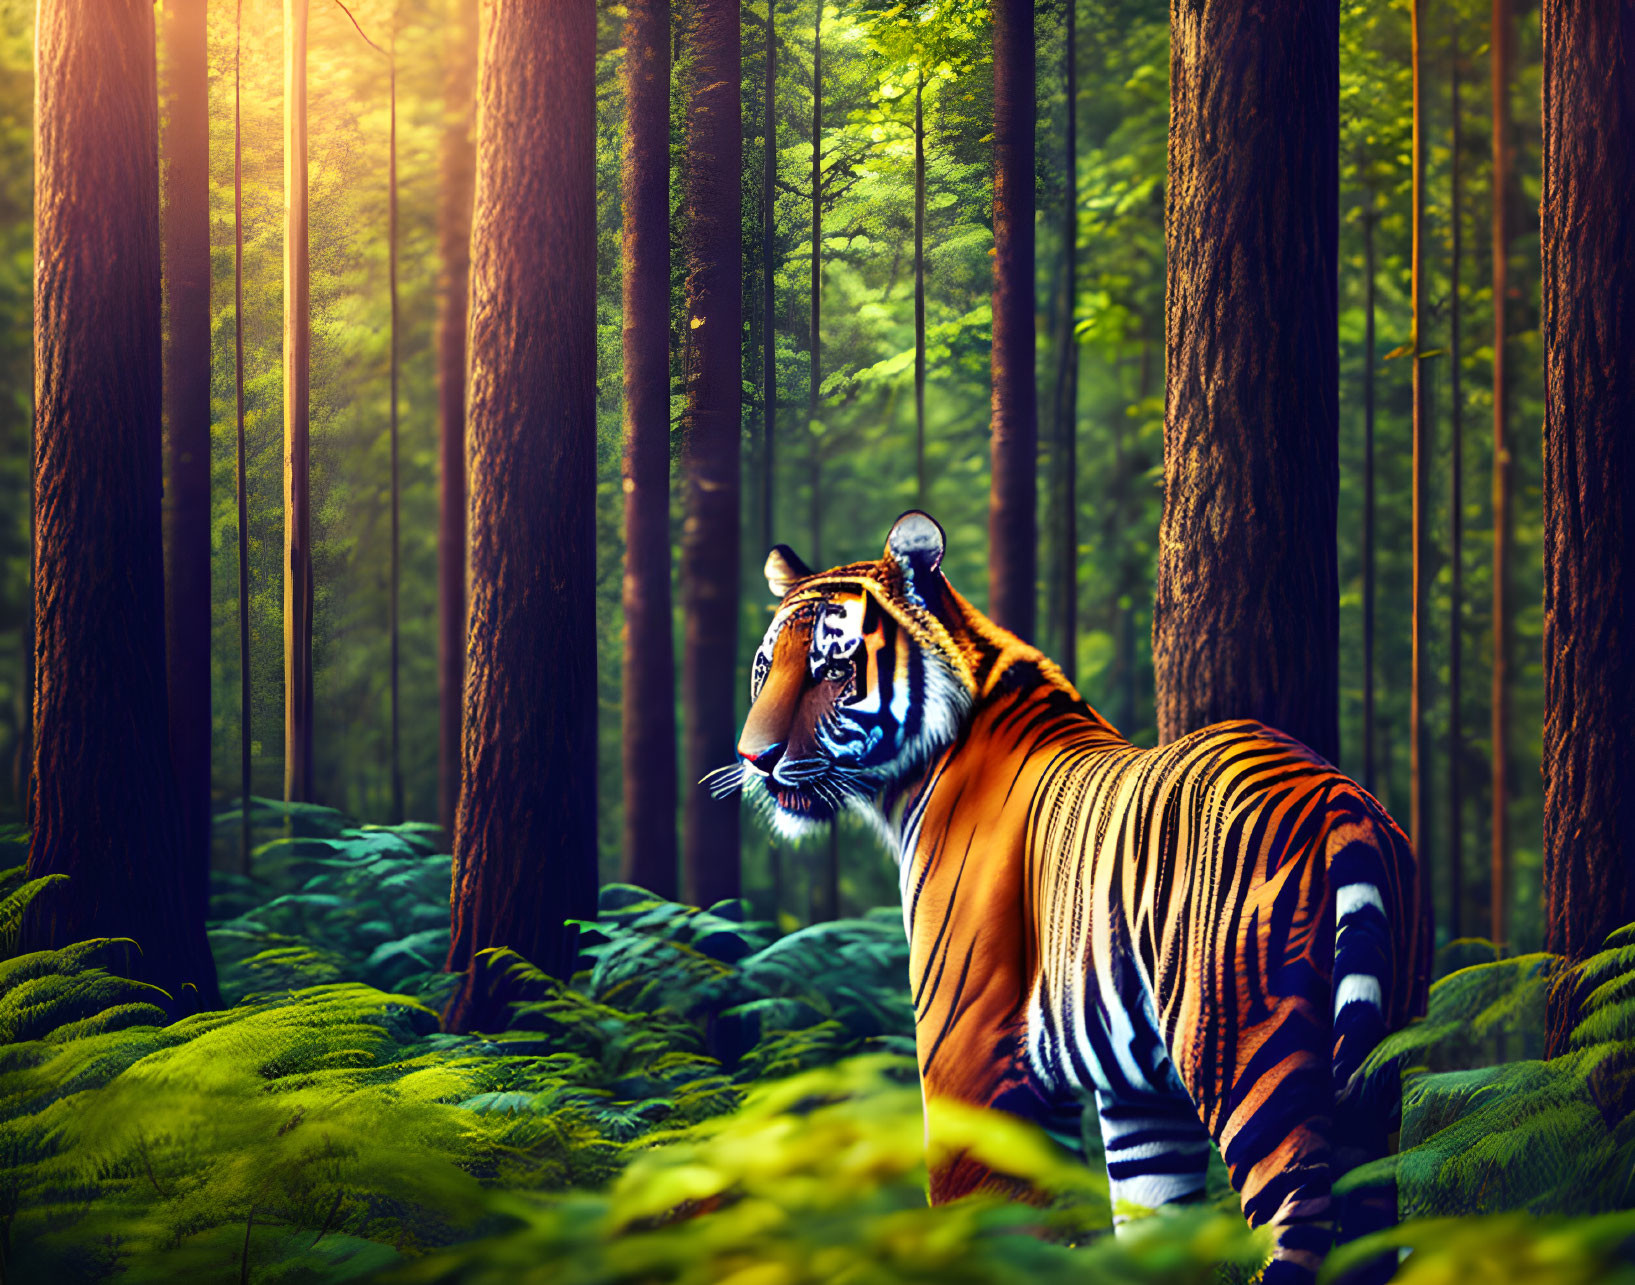 Tiger in forest facing camera amid sunlight